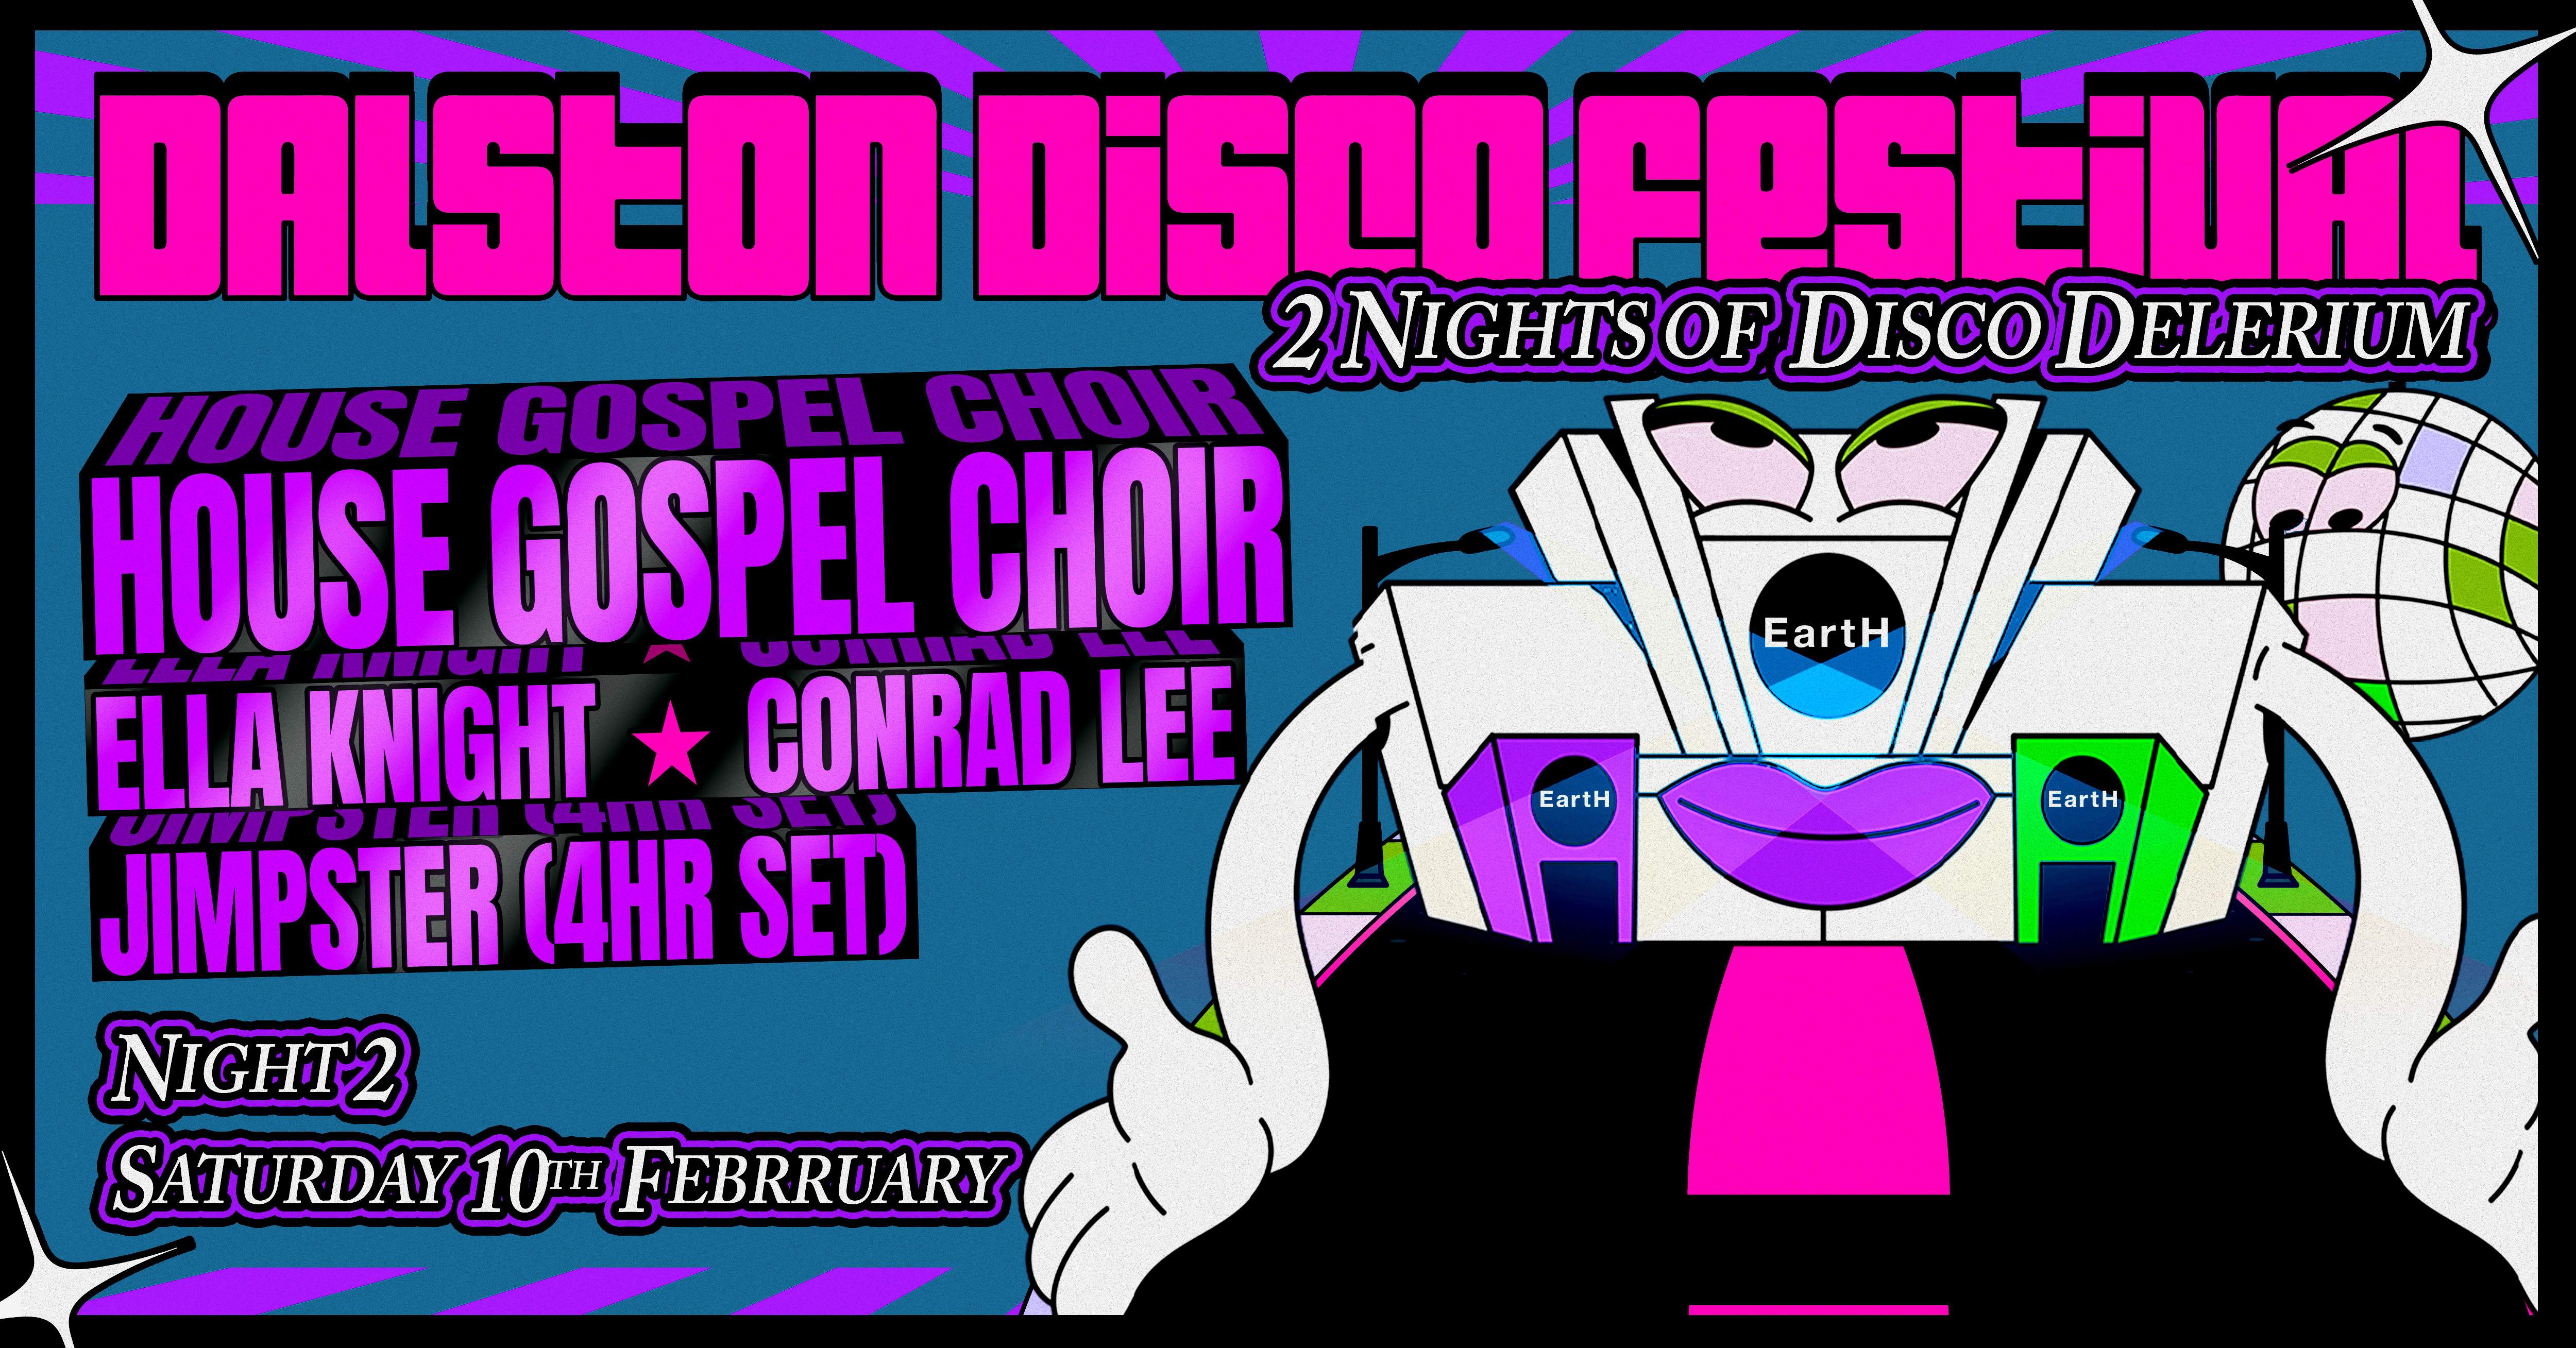 Dalston Disco Festival: House Gospel Choir - フライヤー表